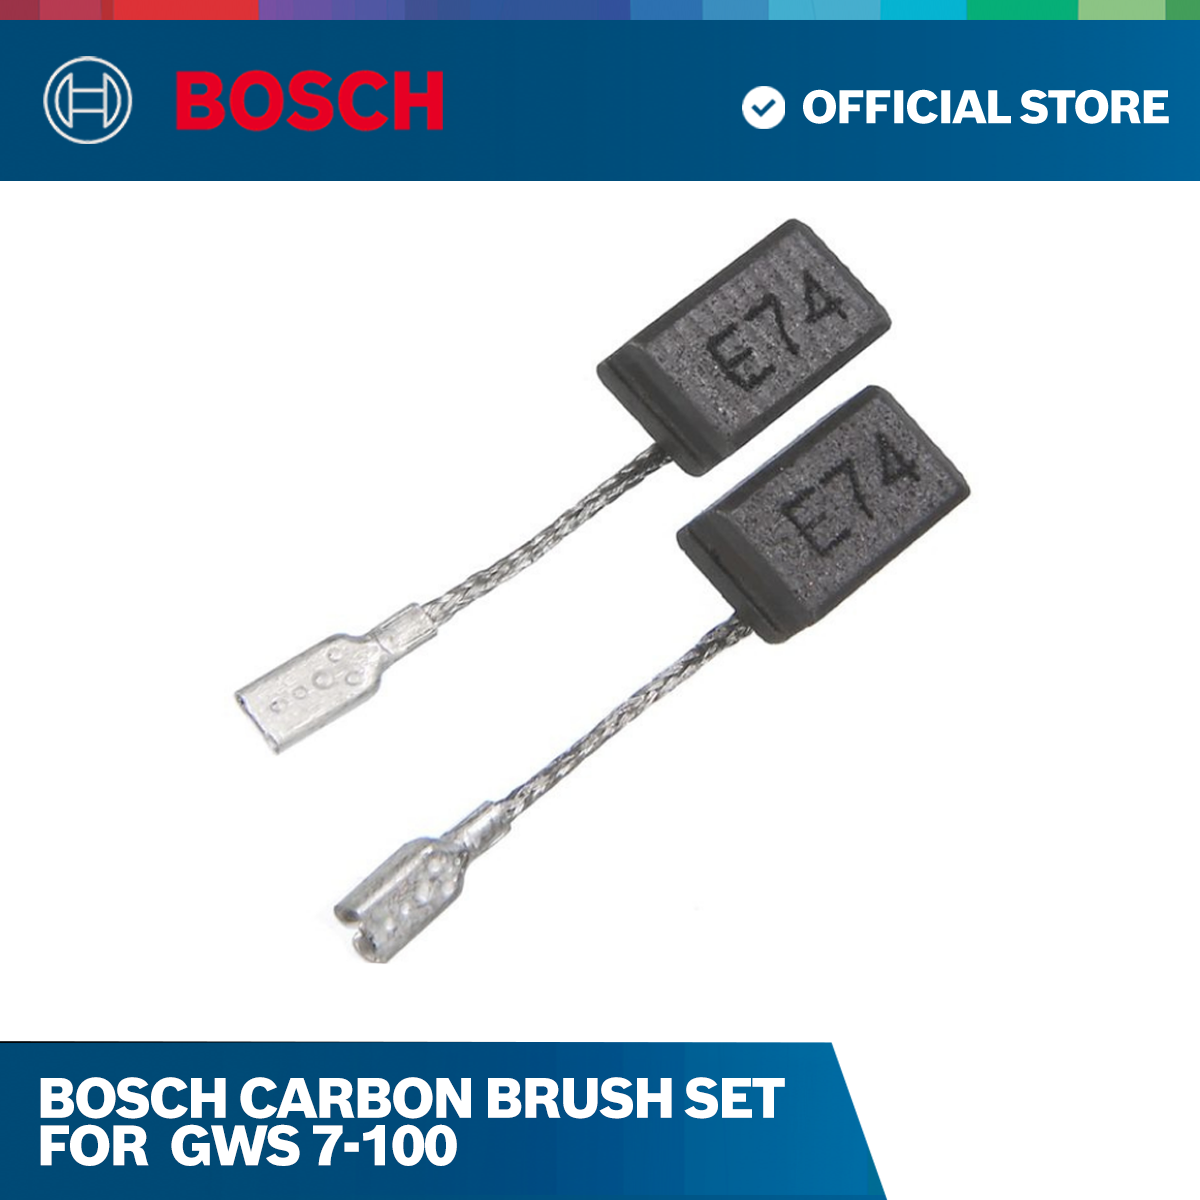 Bosch Carbon Brush Set for GWS 7-100